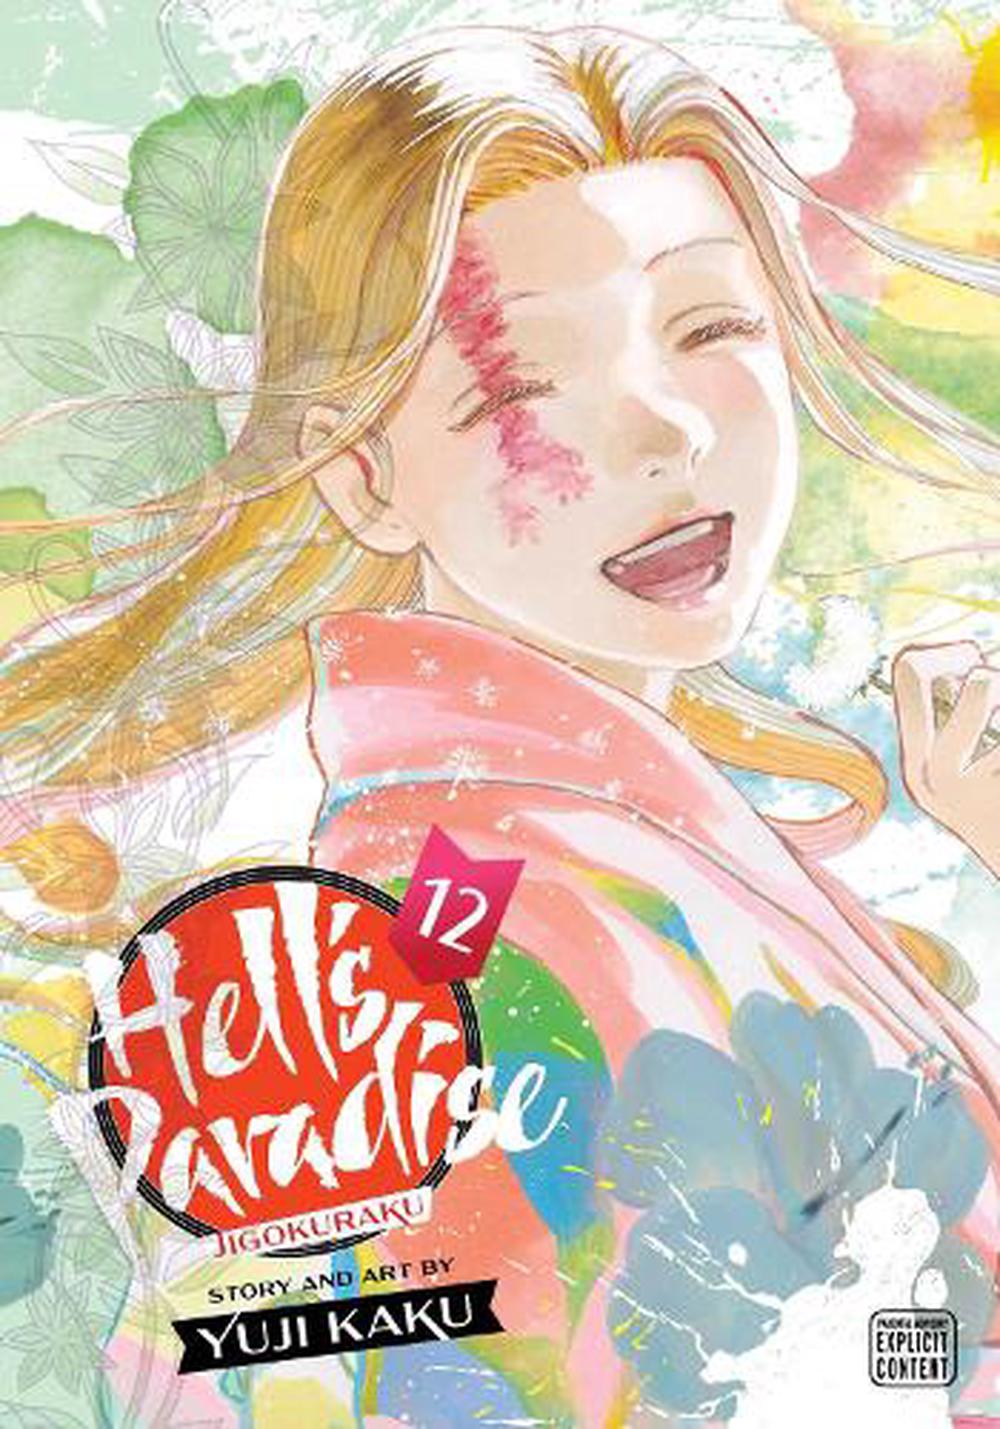 Hell's Paradise Jigokuraku Manga Online